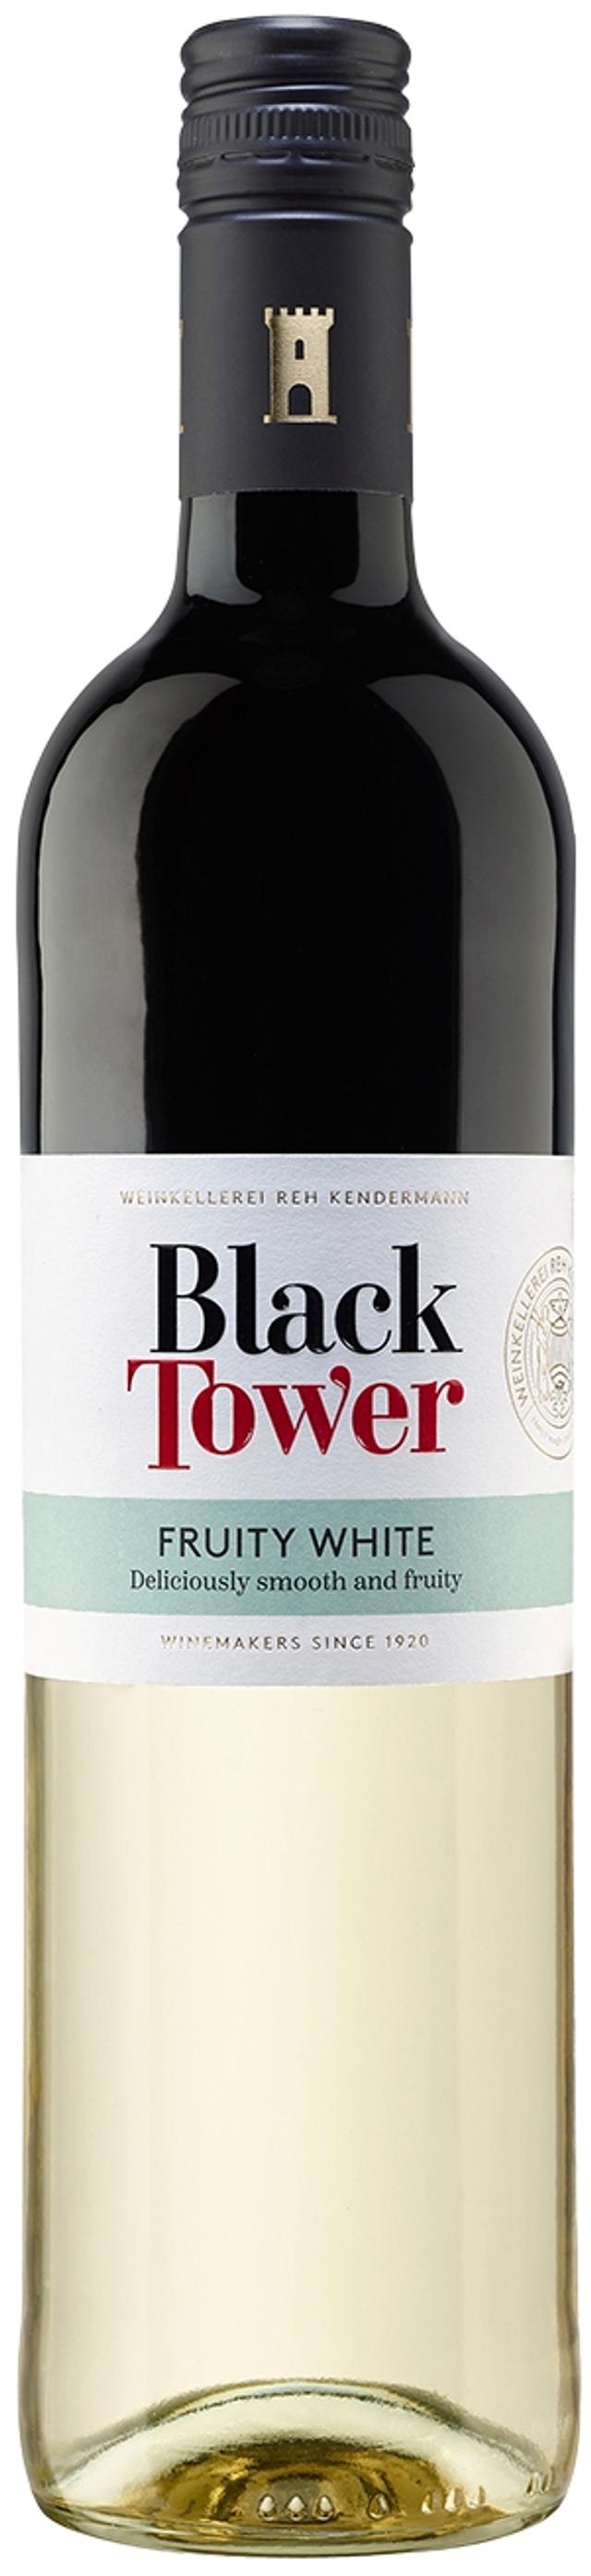 Black Tower Fruity White 0,75L 5,5% viinijuoma